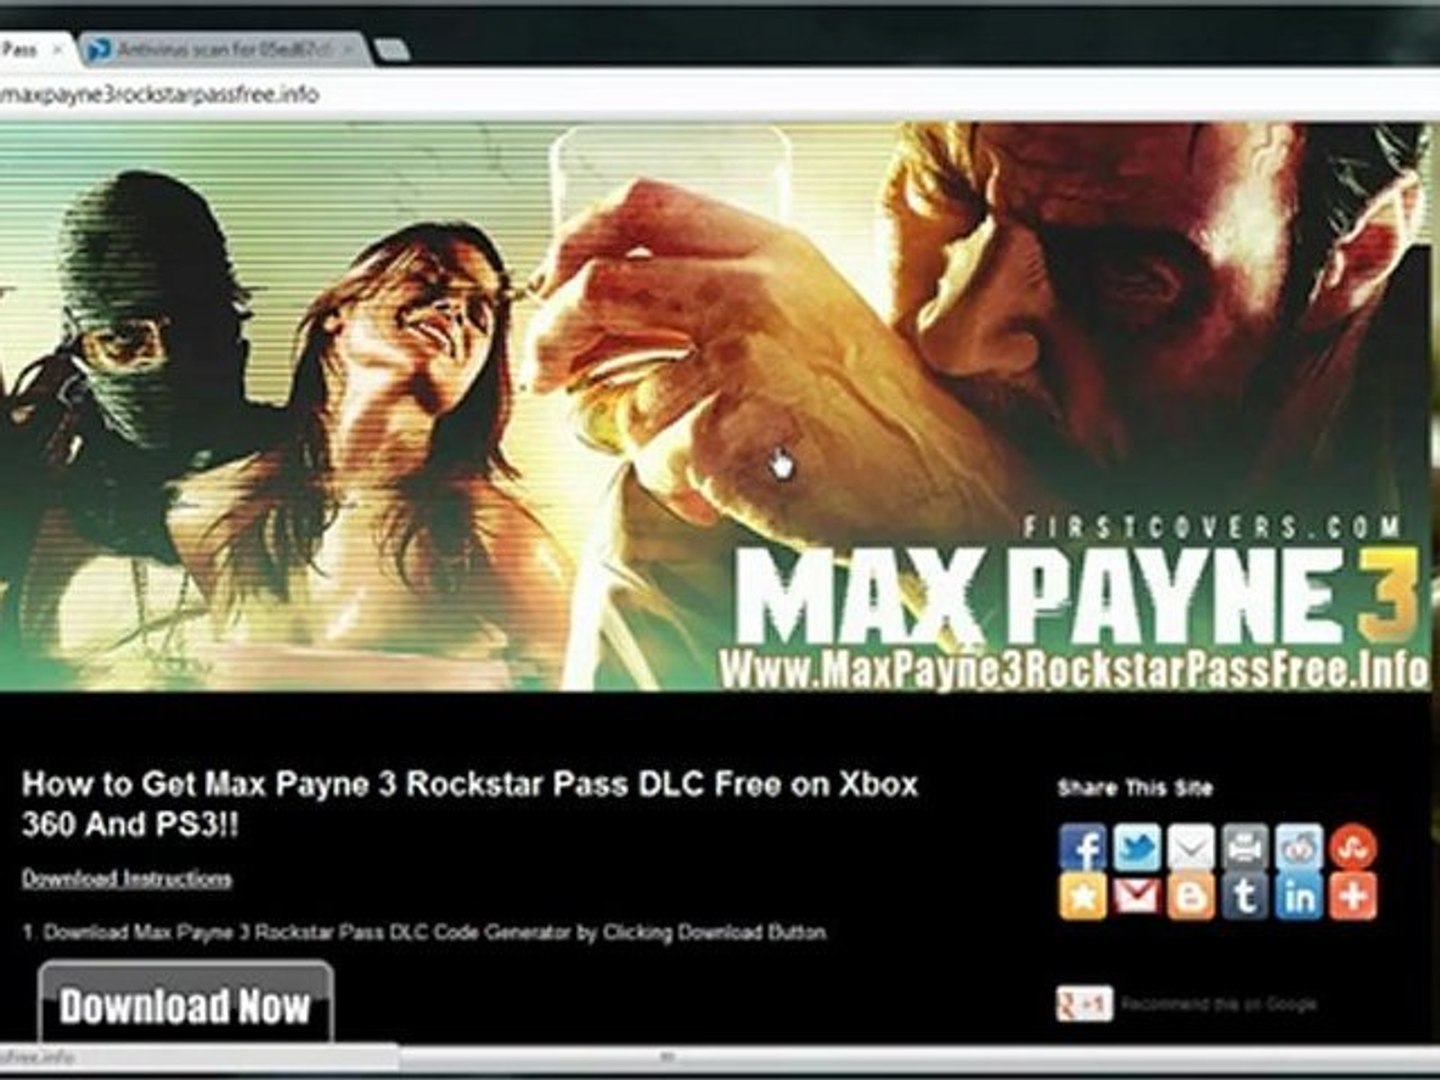 Max Payne 3 Rockstar Pass DLC Code Unlock Tutorial - video Dailymotion